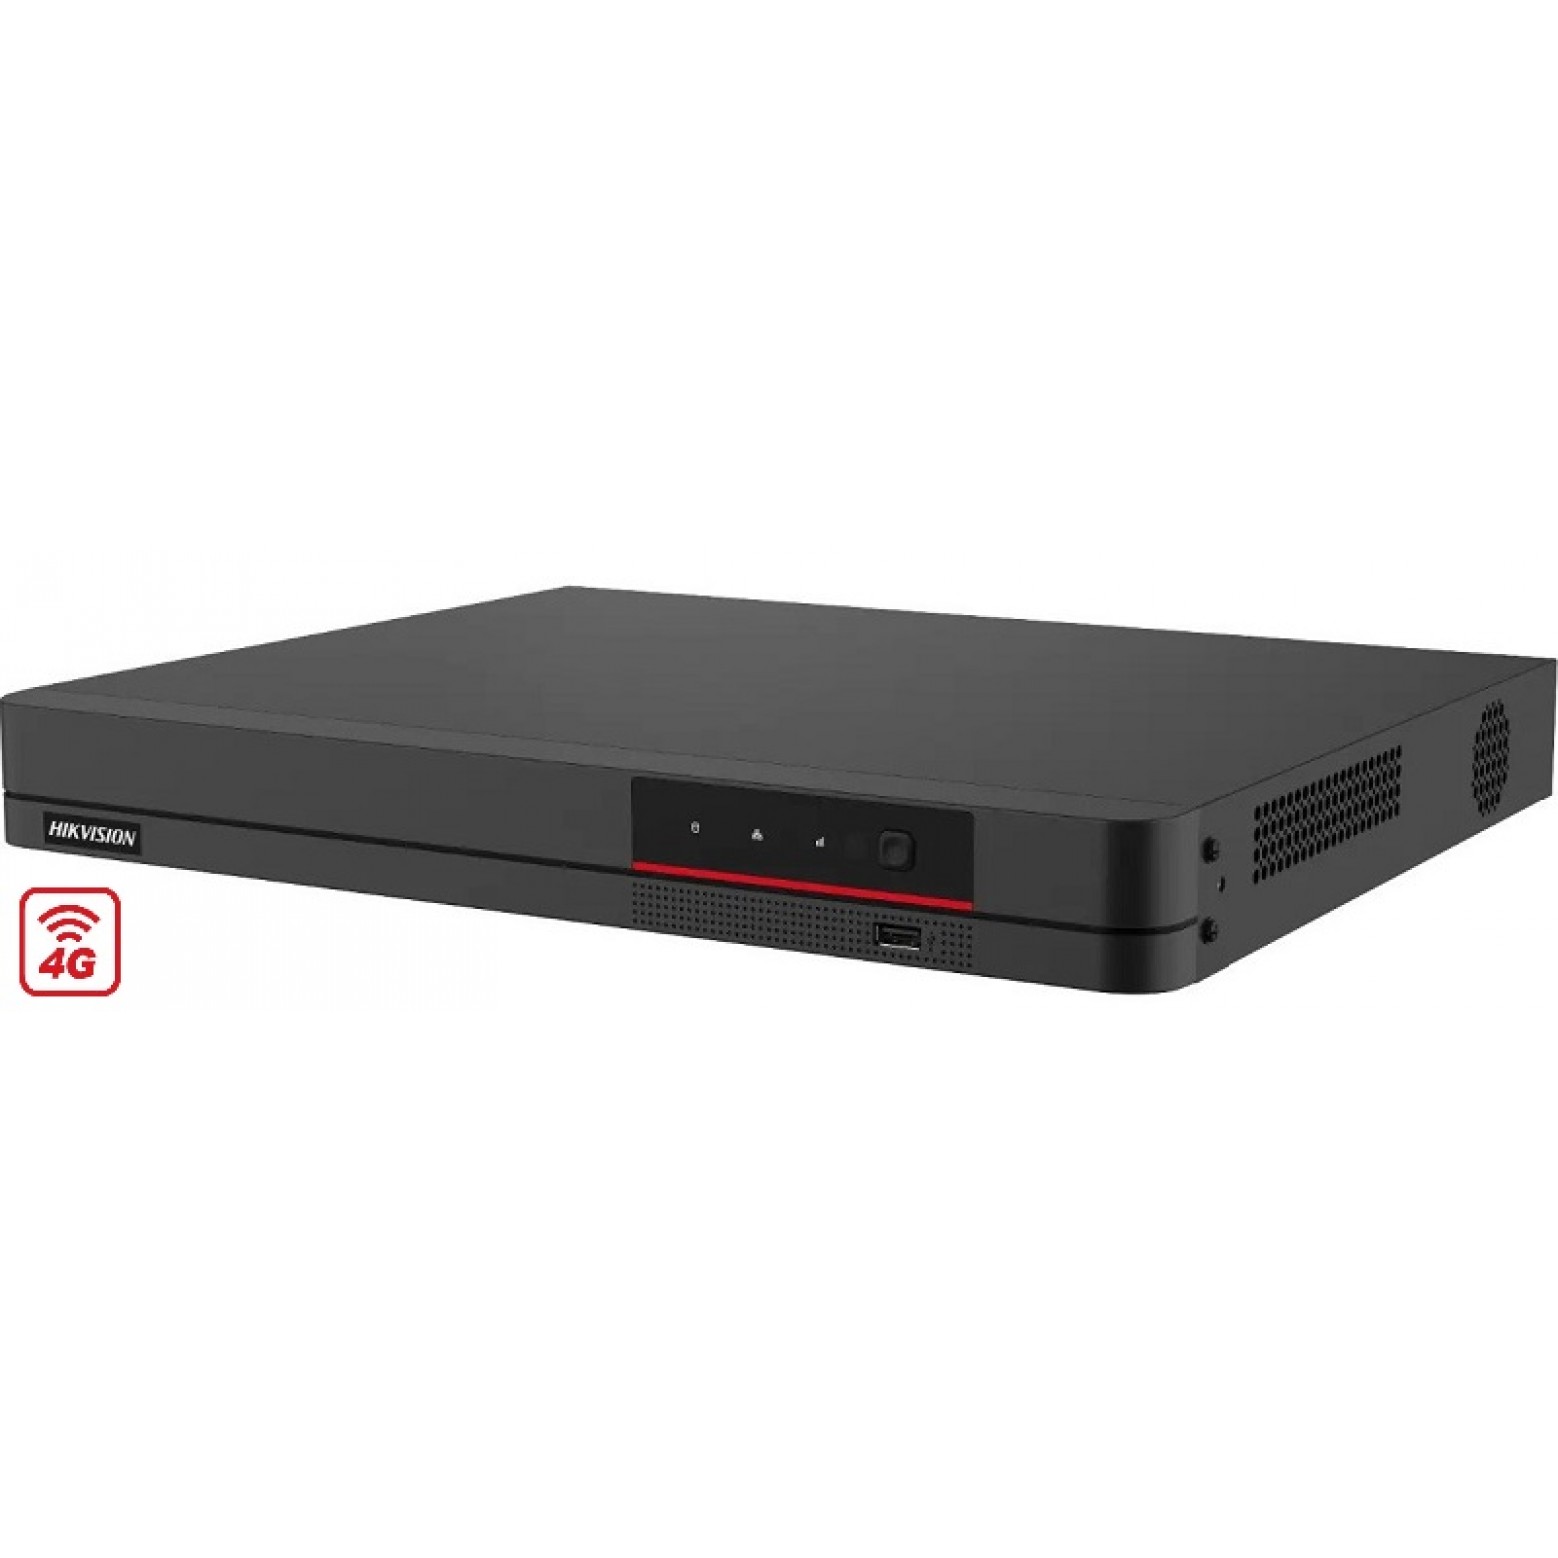 Hikvision DS-7608NI-K2/8P/4G, NVR POE a 8 canali Hikvision, interfaccia scheda SIM 4G